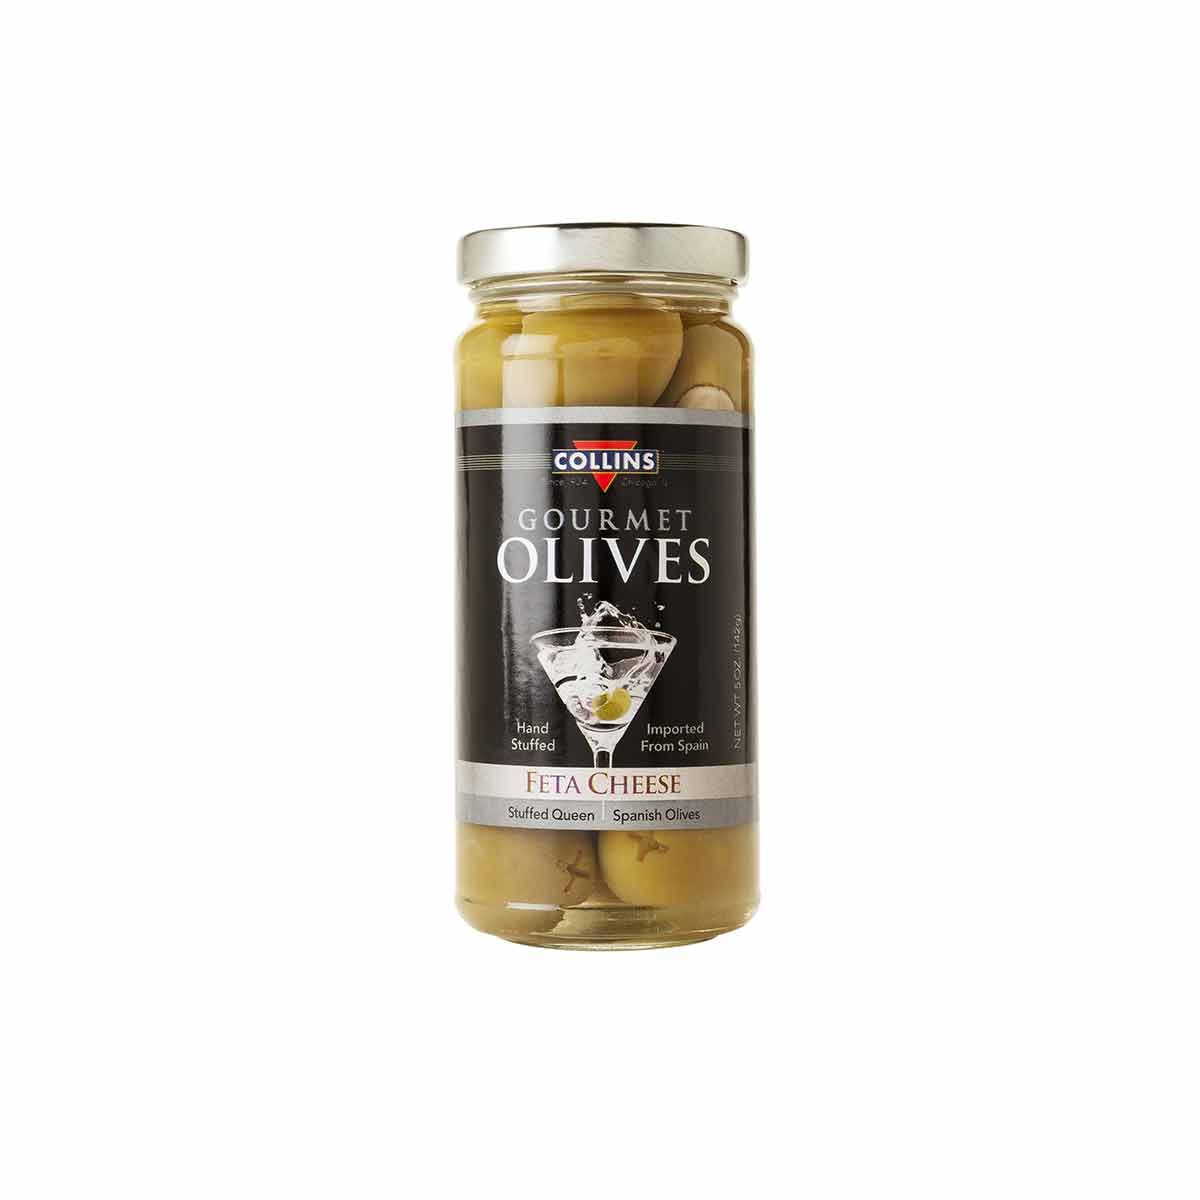 5 oz Gourmet Feta Cheese Olives 1